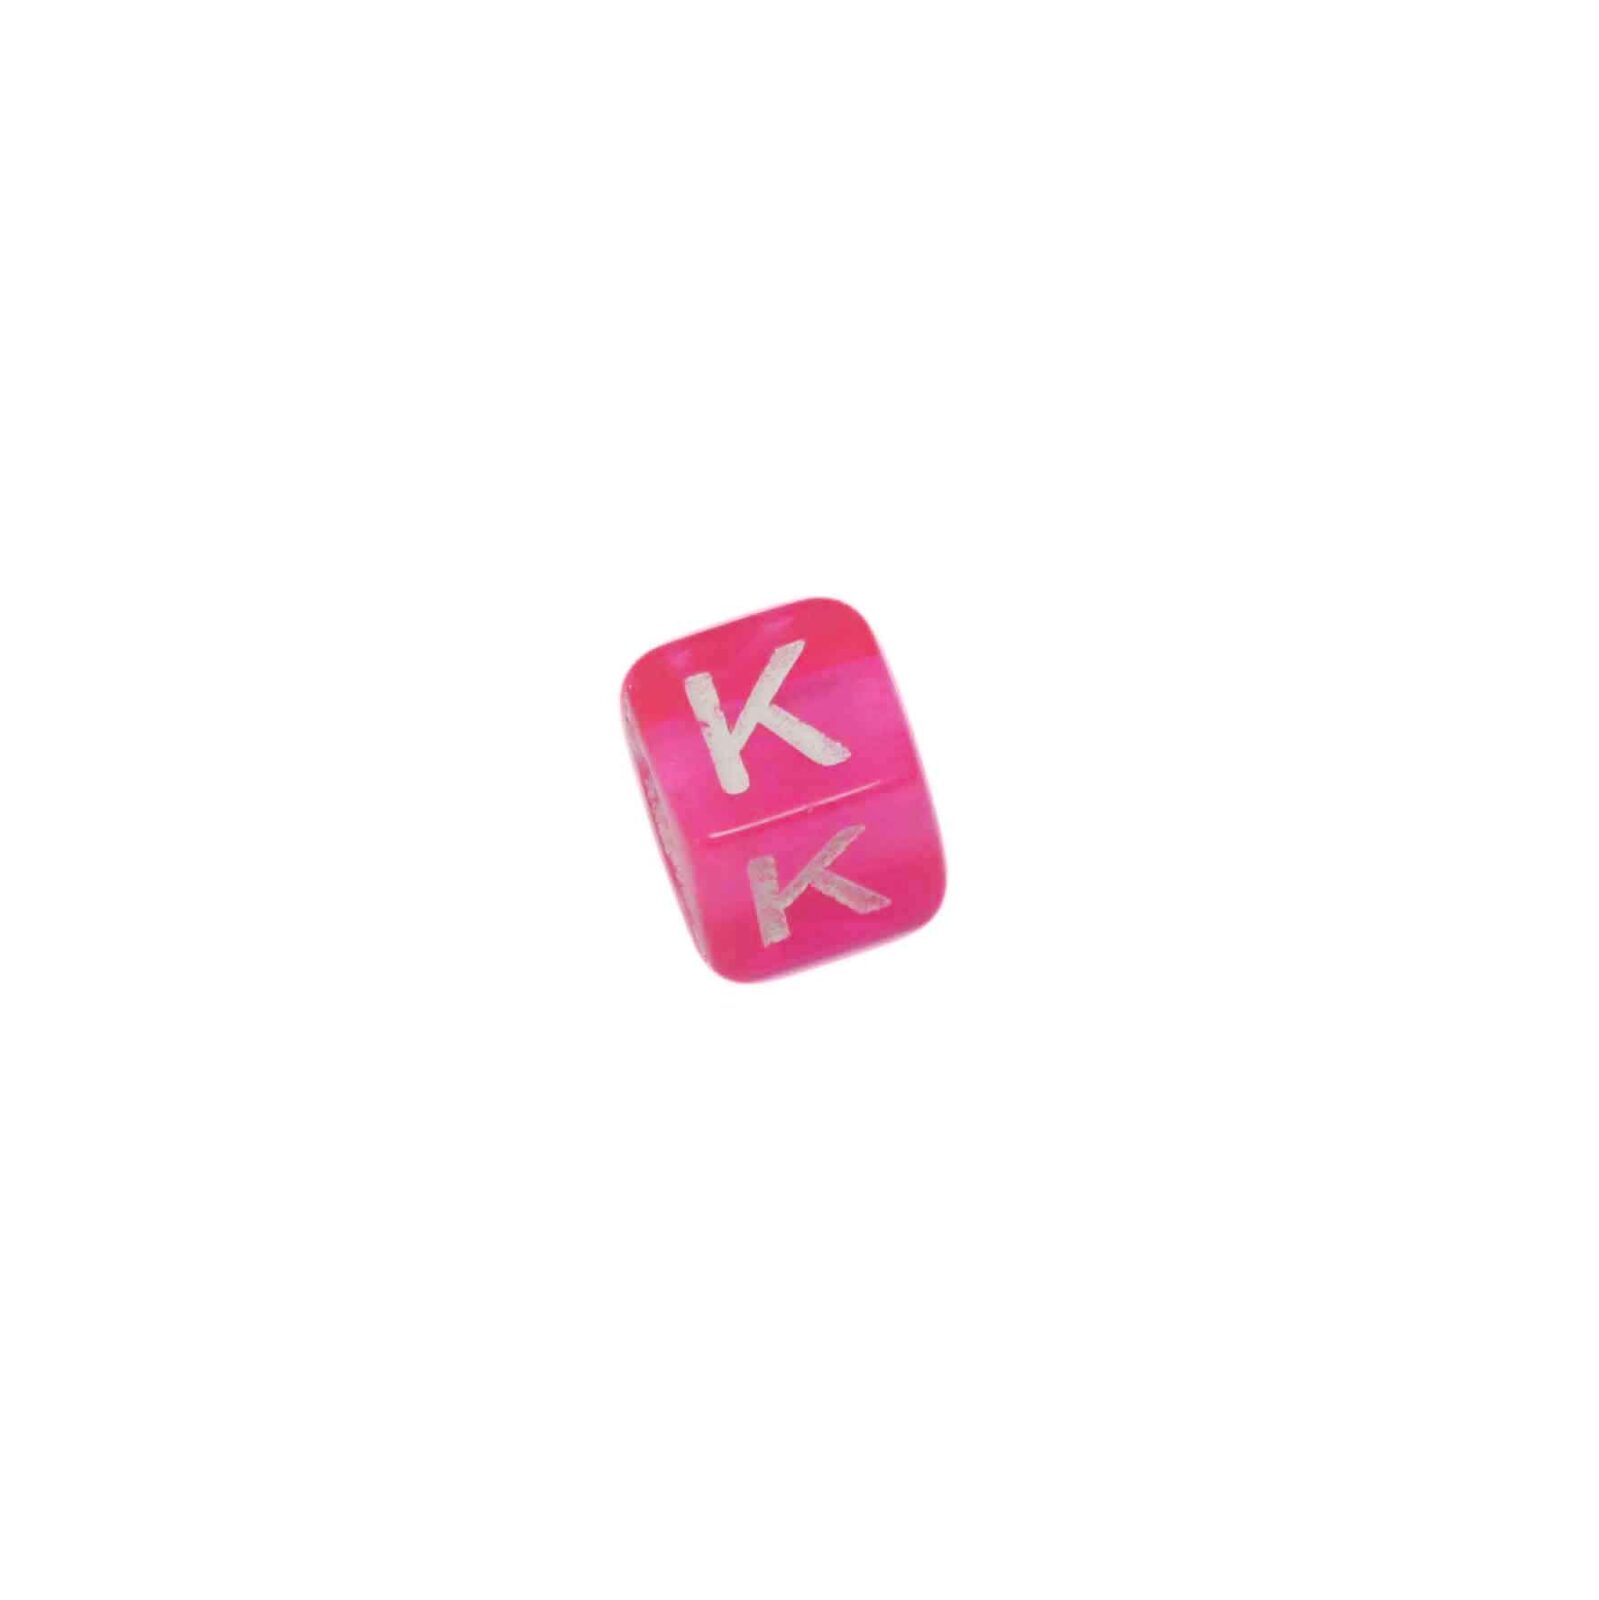 Rood roze letterkraal K